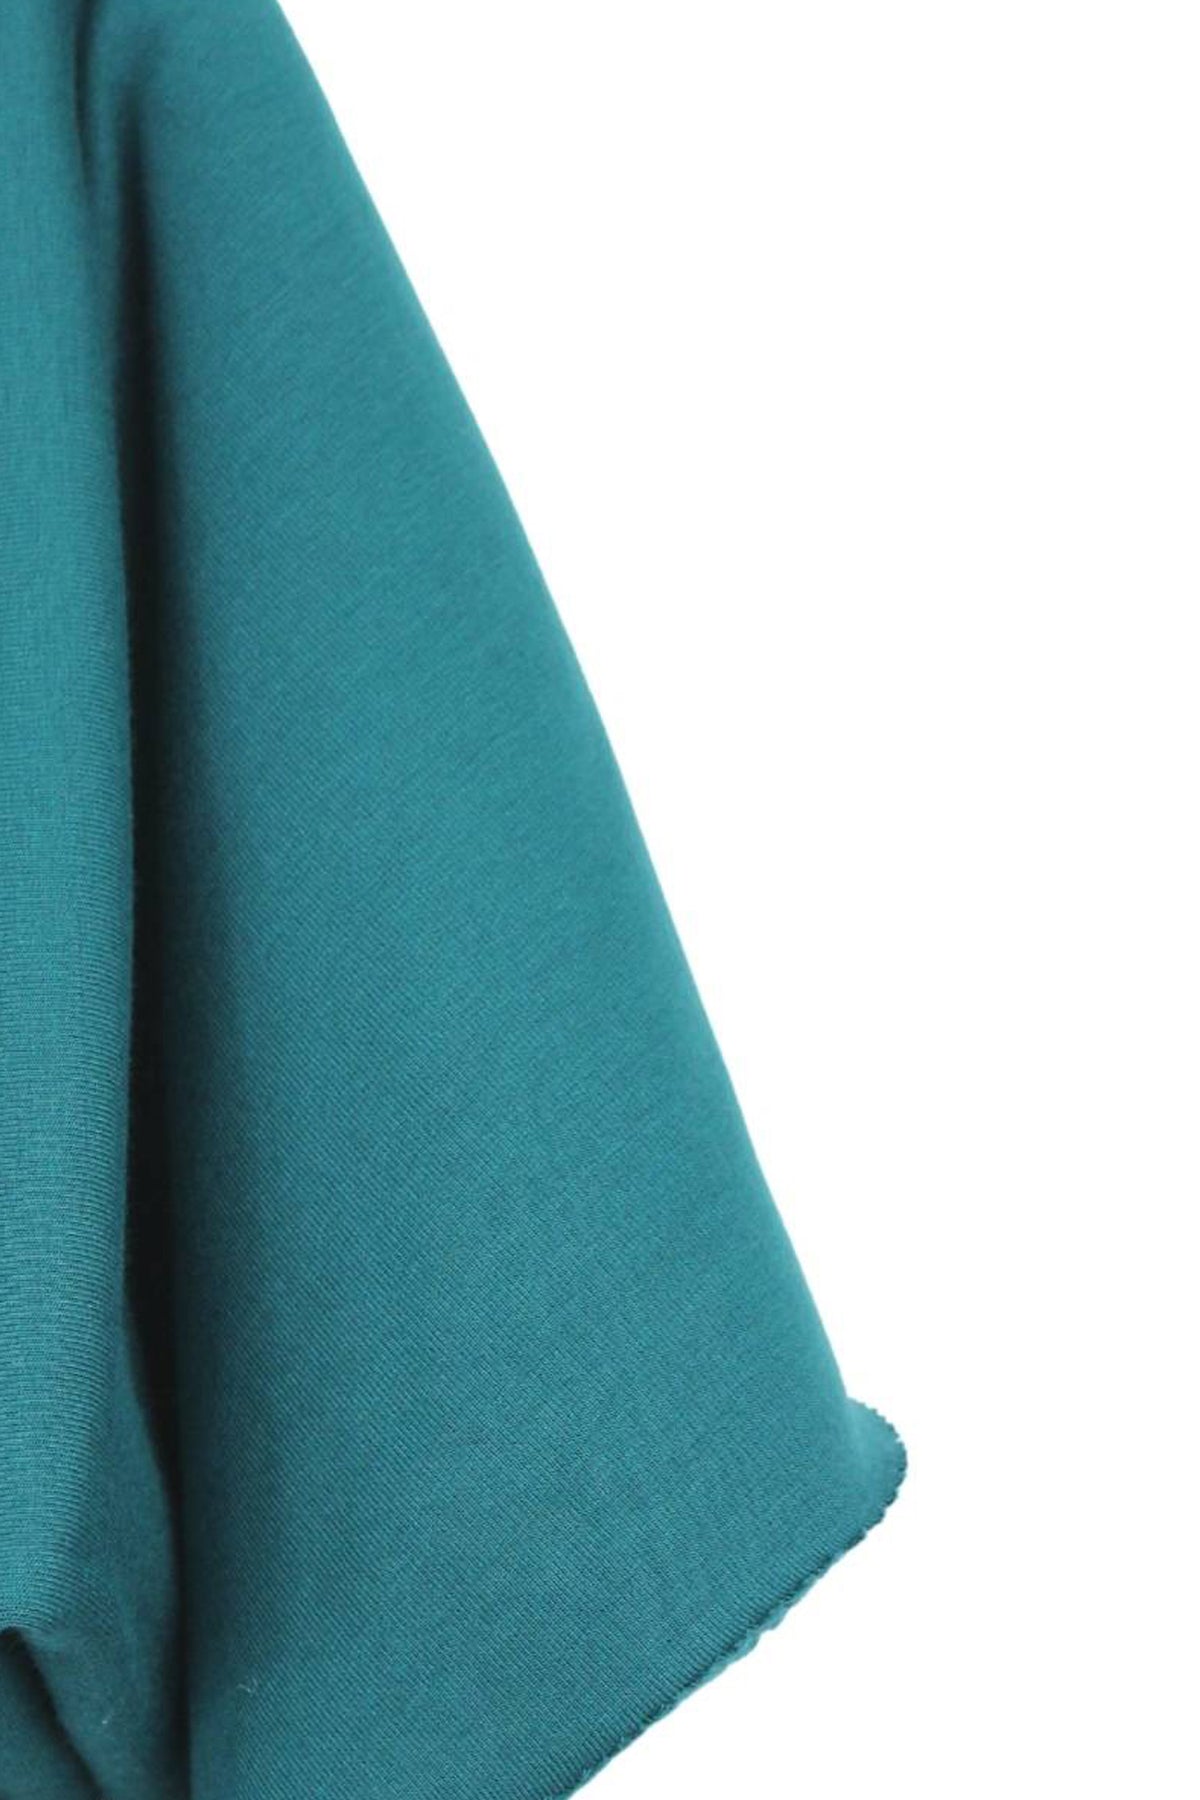 T4712/T4722 - Bamboo Cotton Stretch Fleece | KenDor Textiles